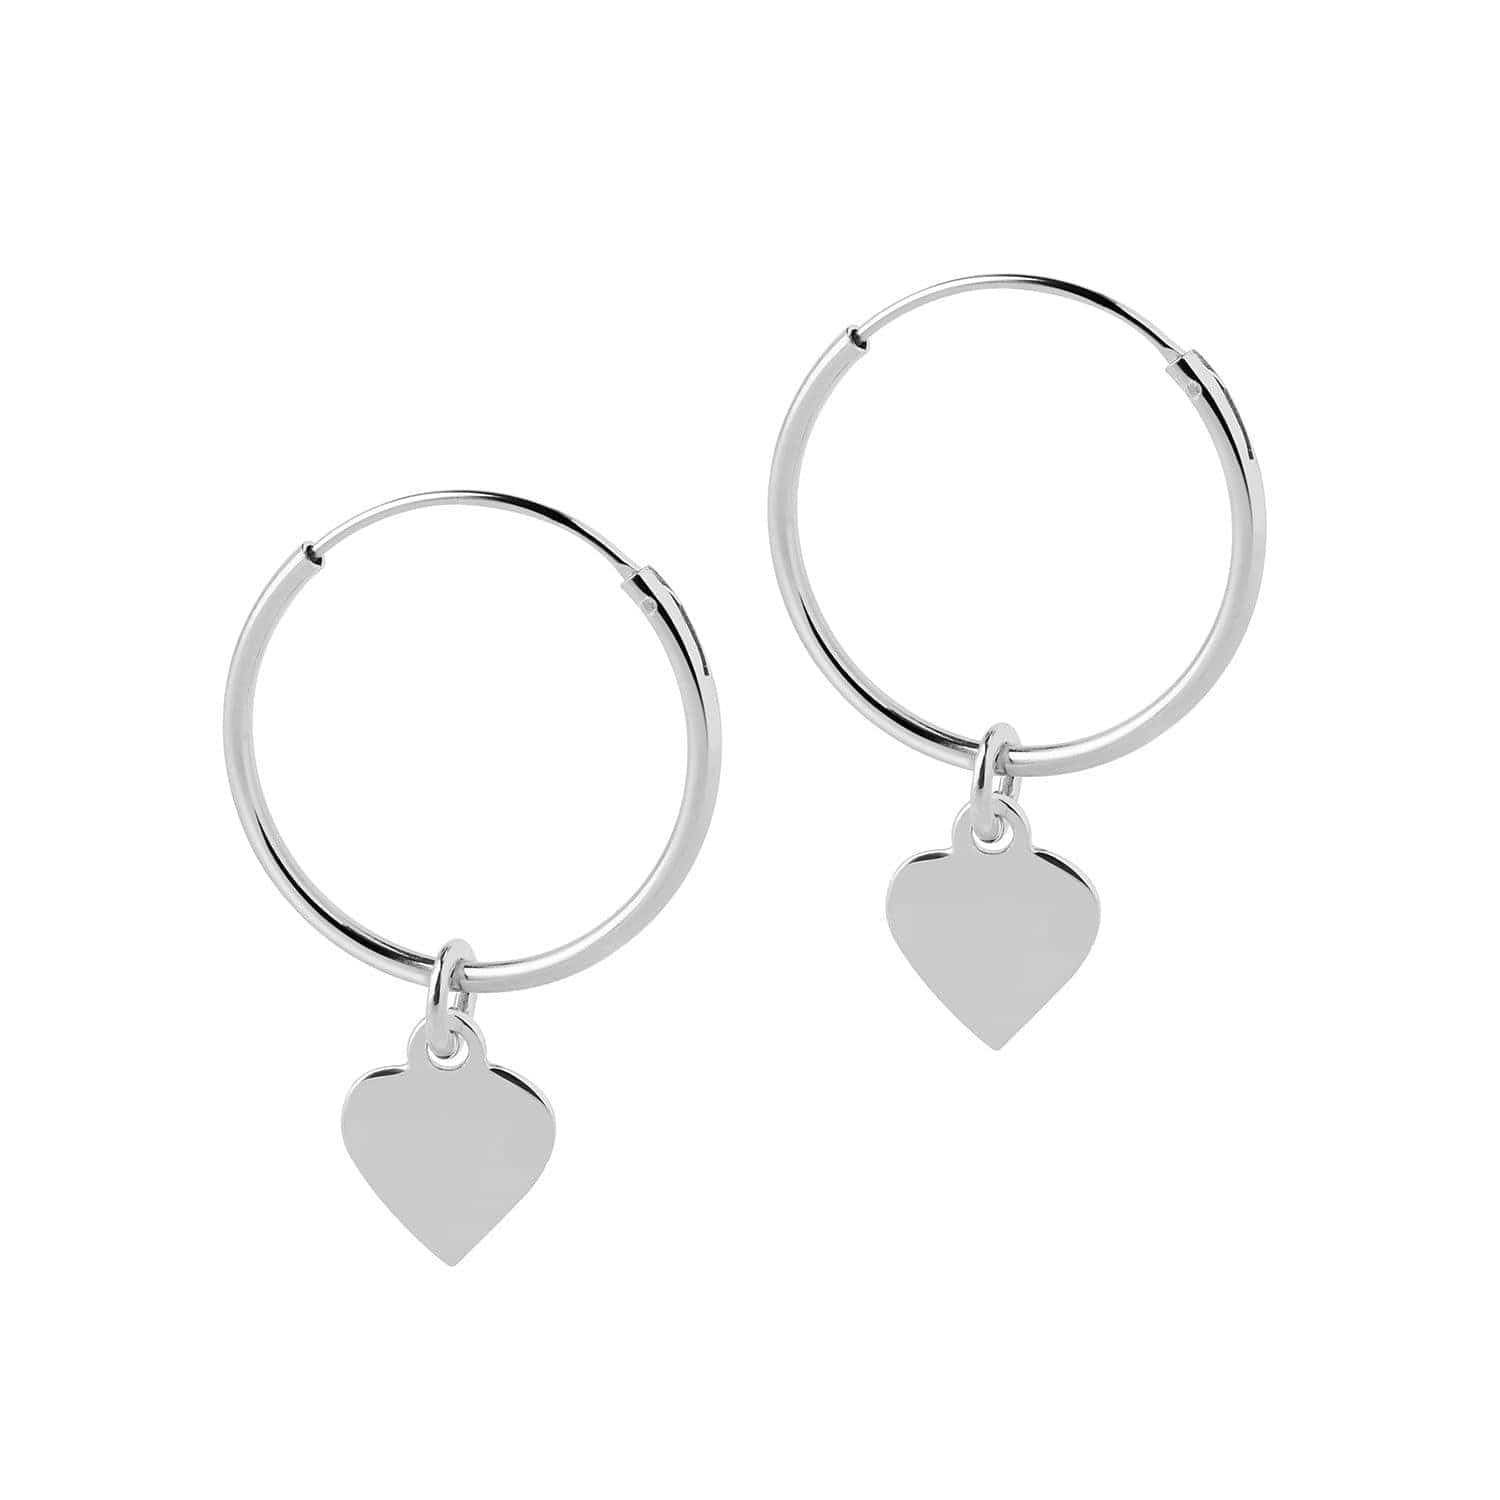 Hoop Earrings with Pendant Heart Silver 18MM